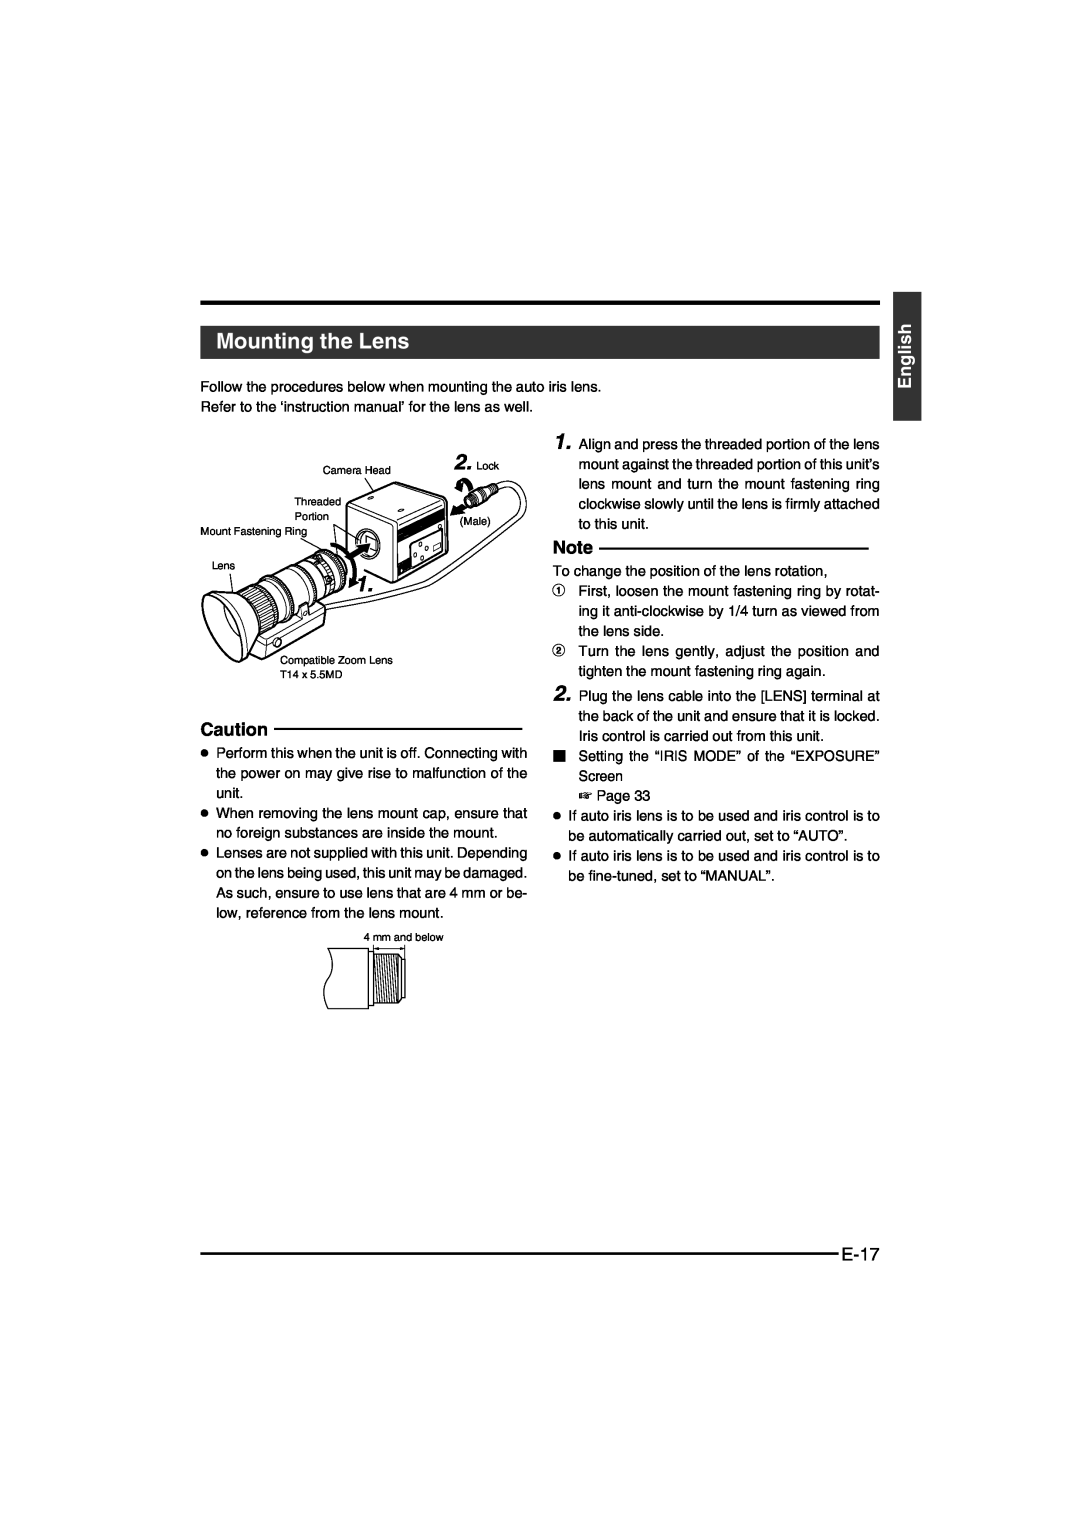 JVC KY-F550E instruction manual Mounting the Lens, E-17, English 